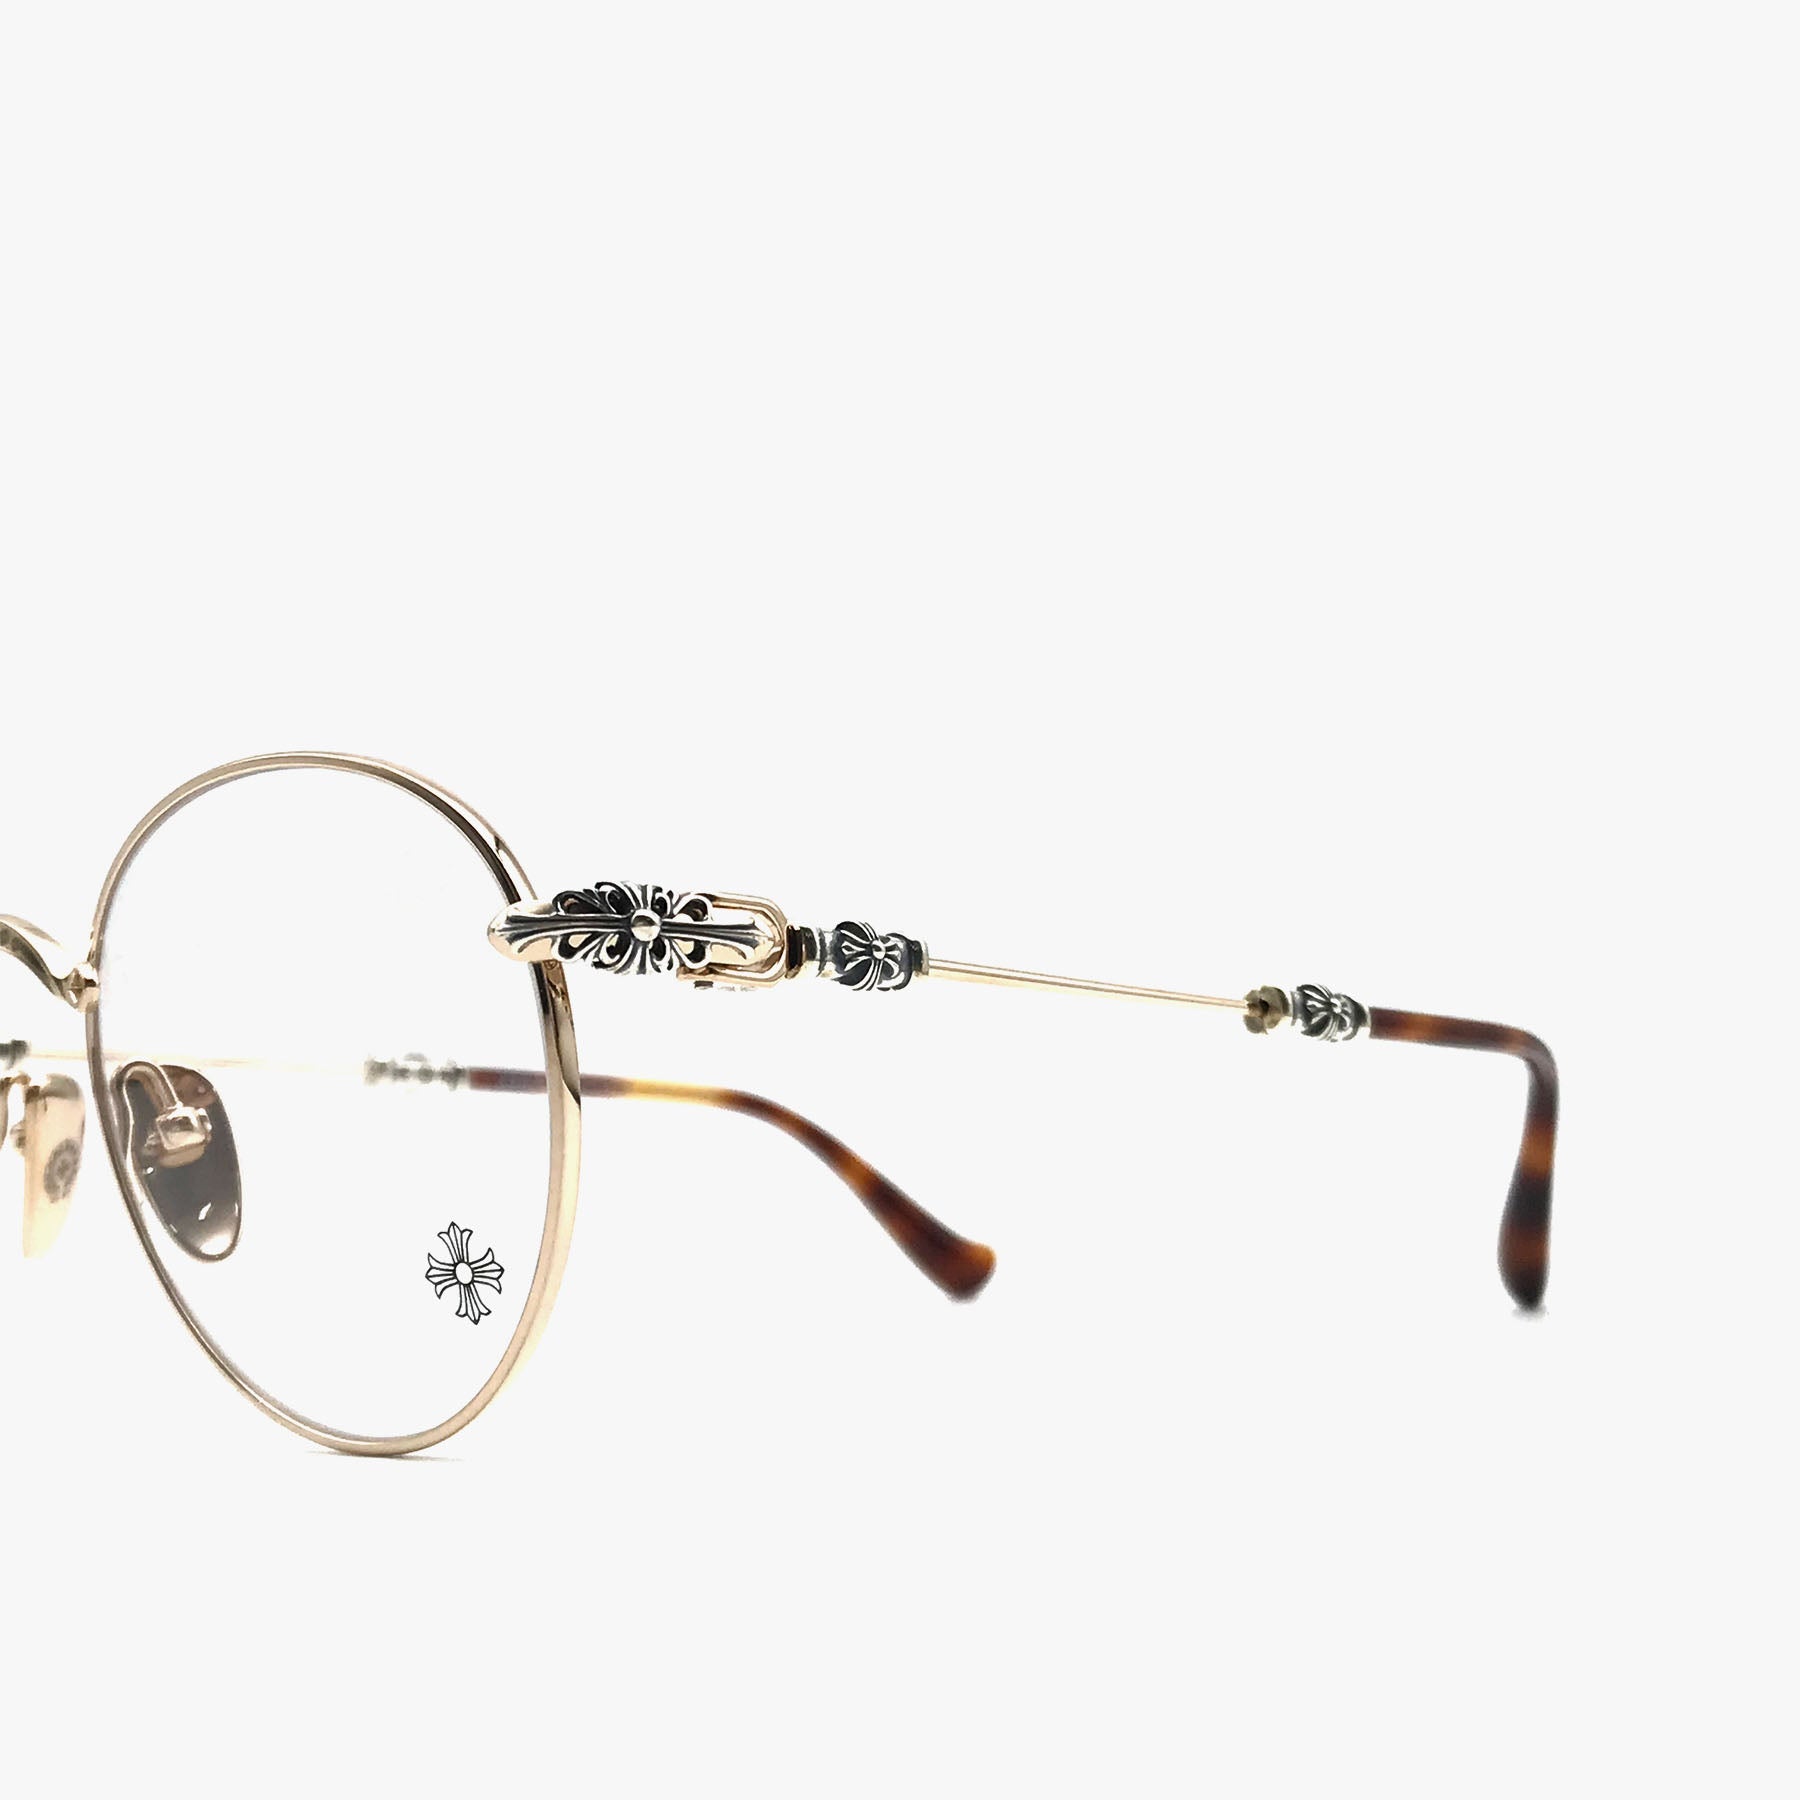 Chrome Hearts GP-P Gold & Pinto Glasses -SHENGLI ROAD MARKET